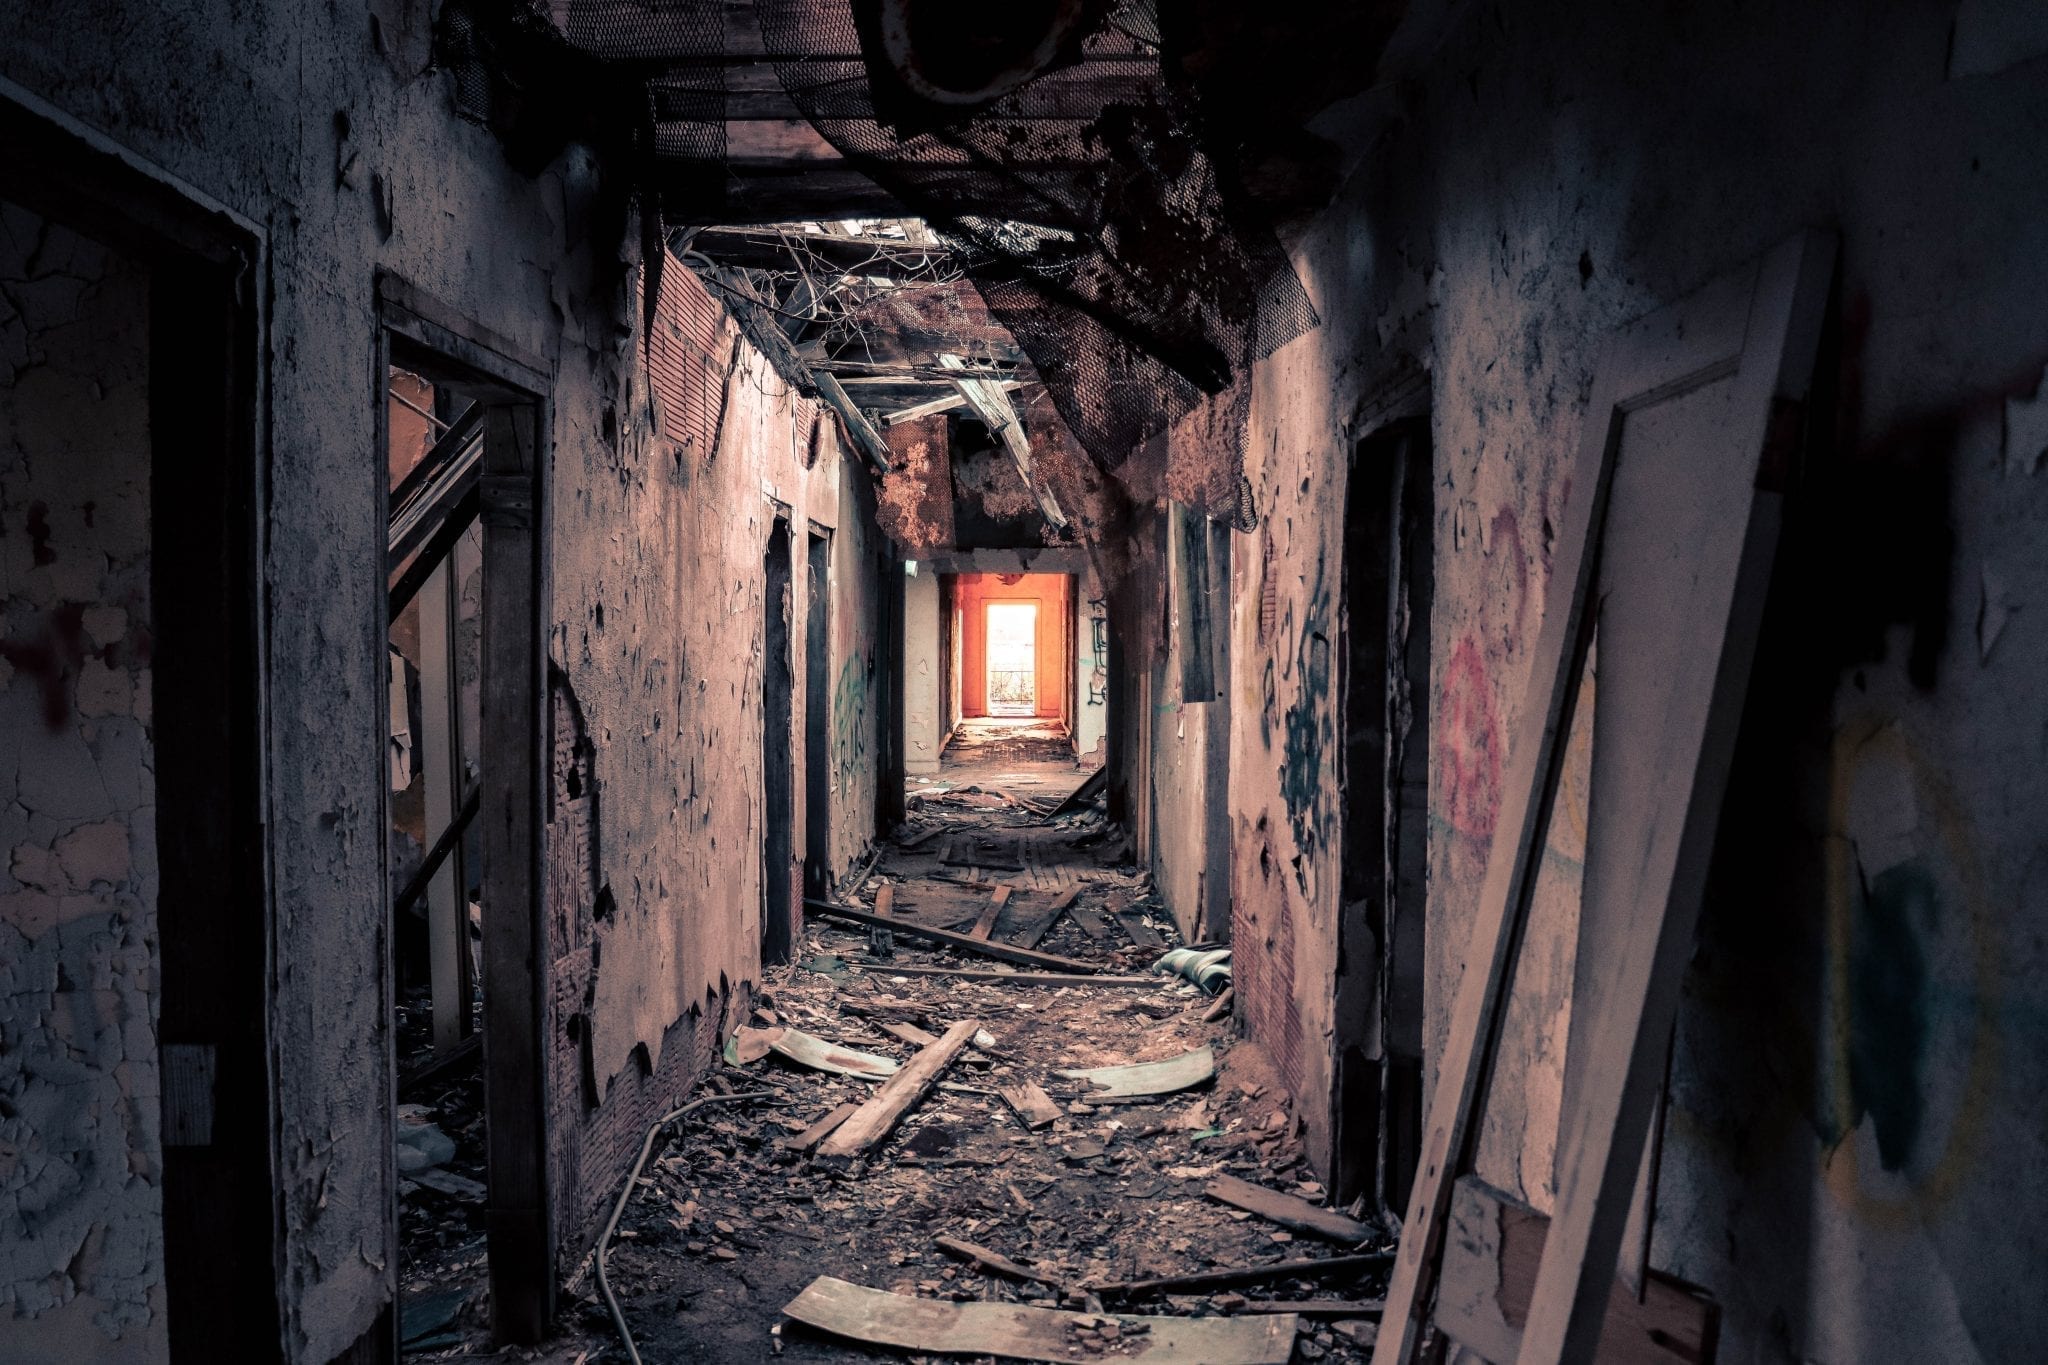 A decrepit, falling-apart hallways leads to an uncertain light.